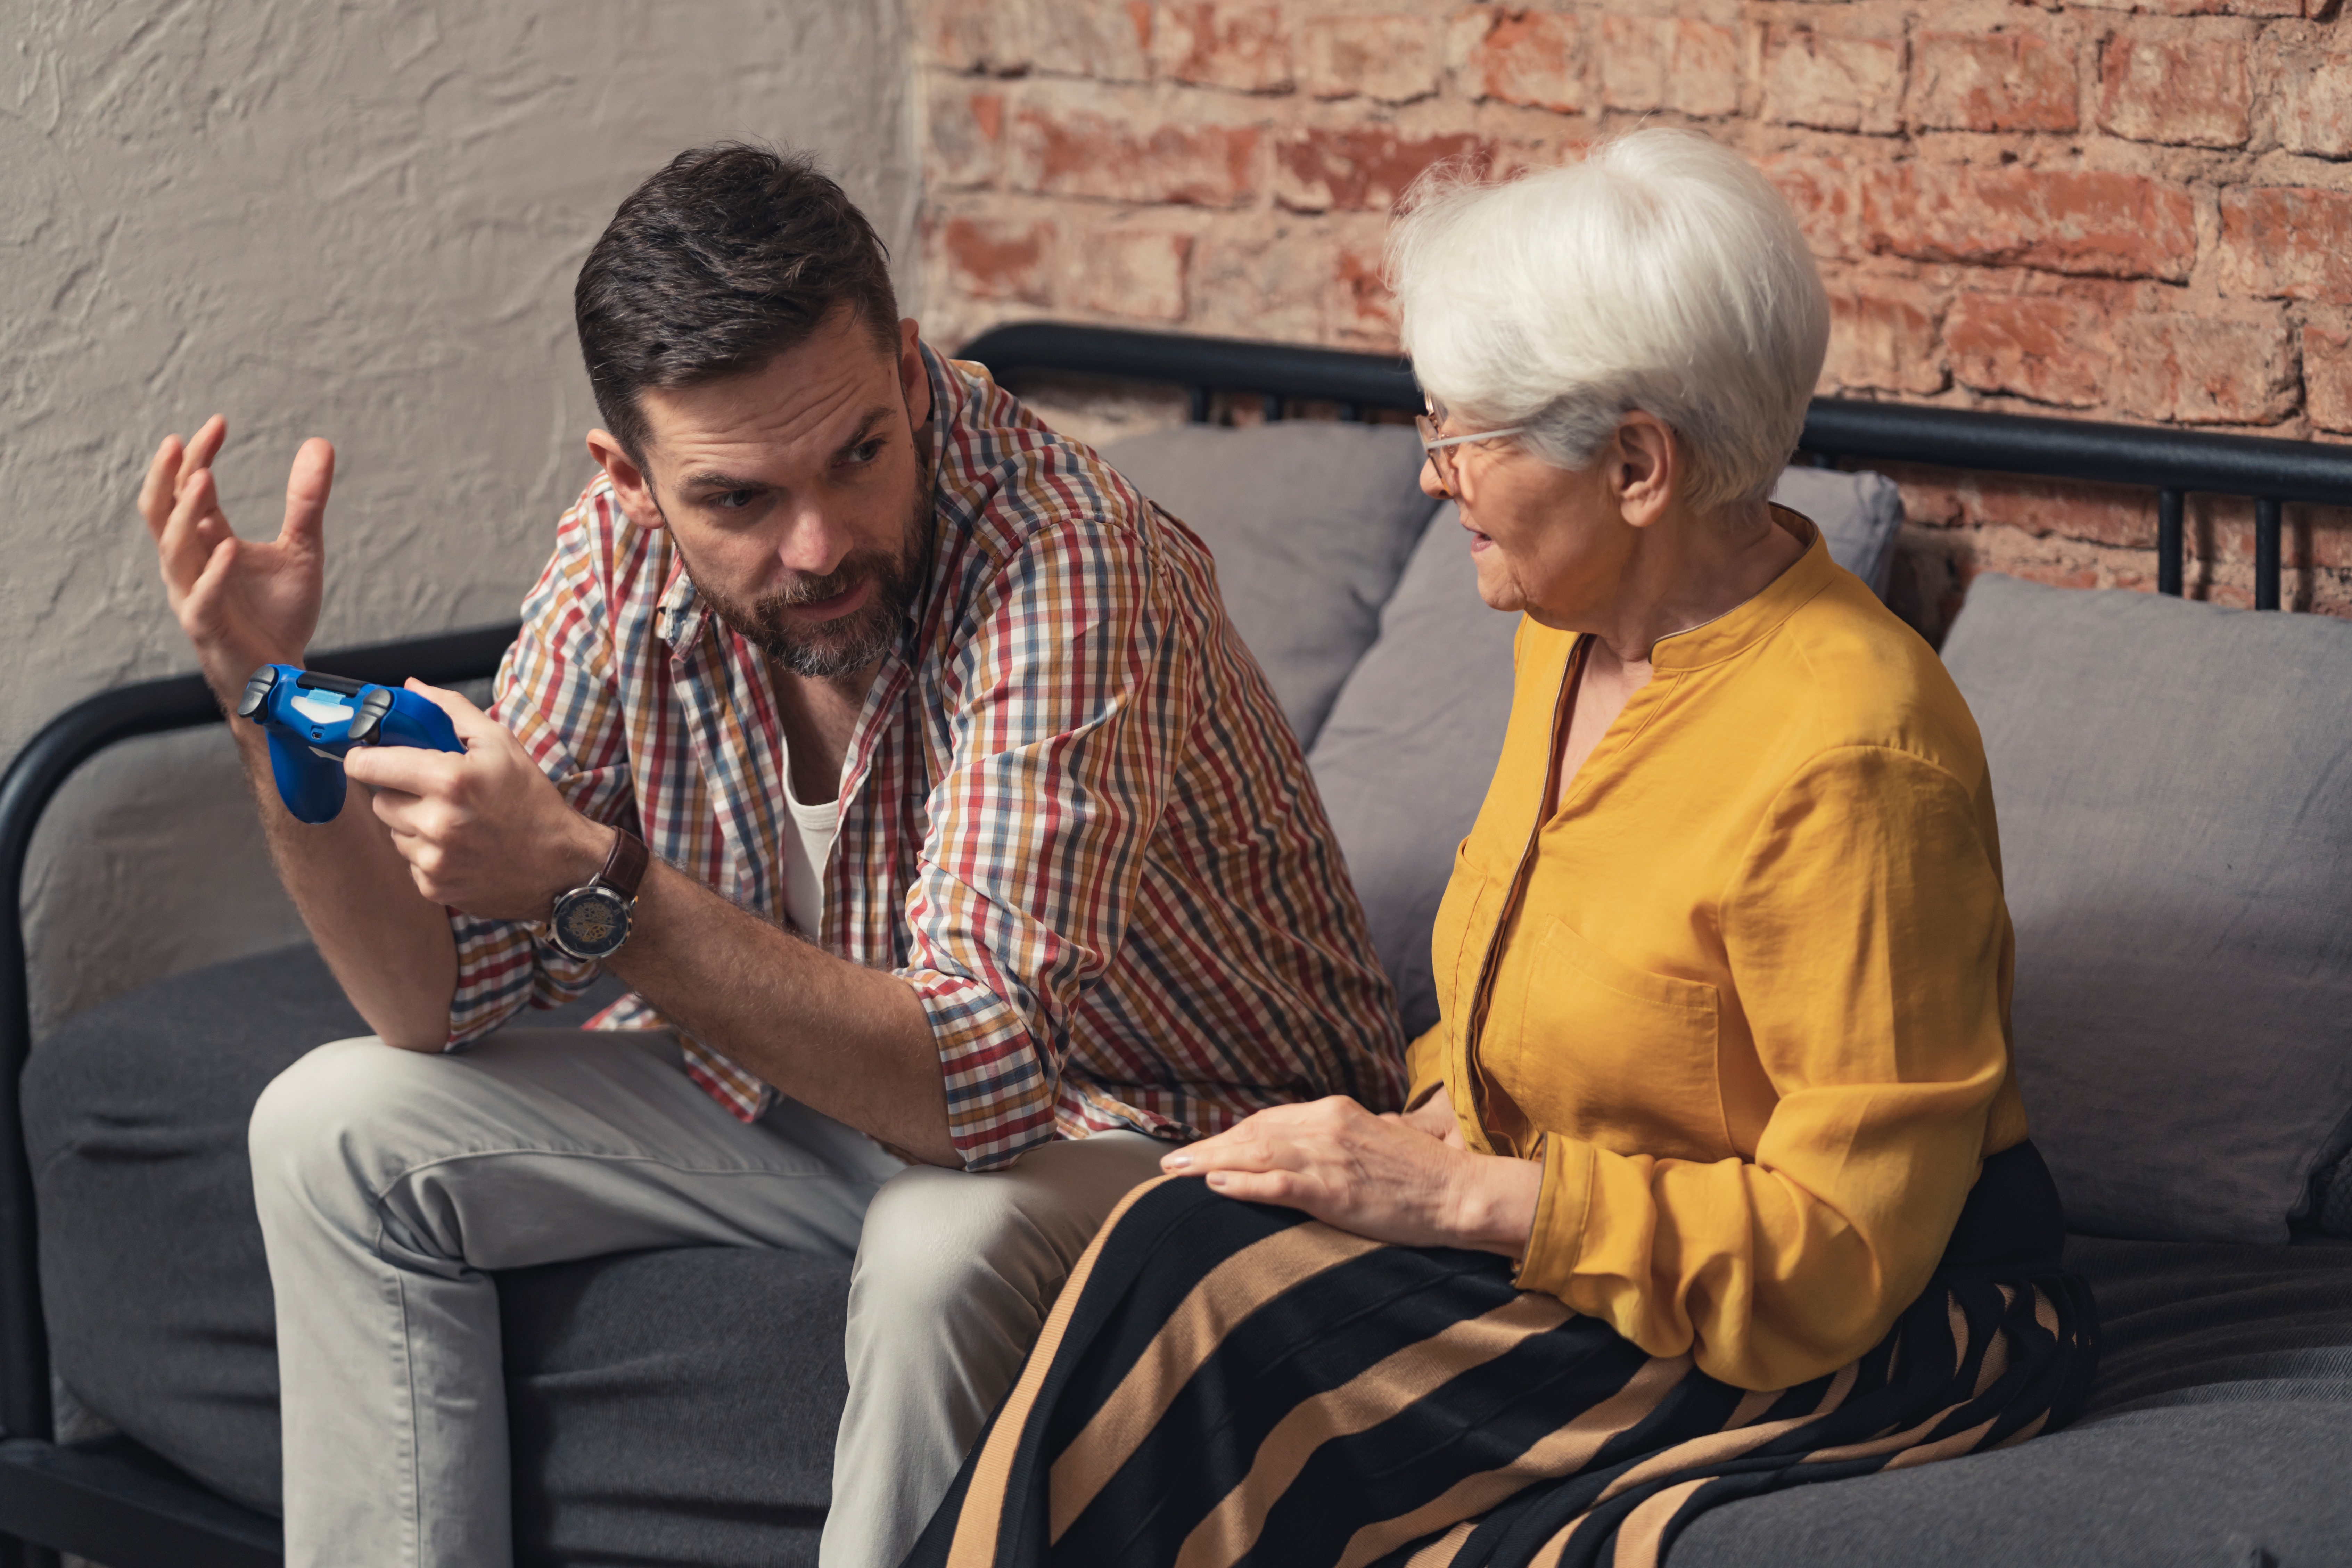 A man talking with an elderly woman | Source: Shutterstock